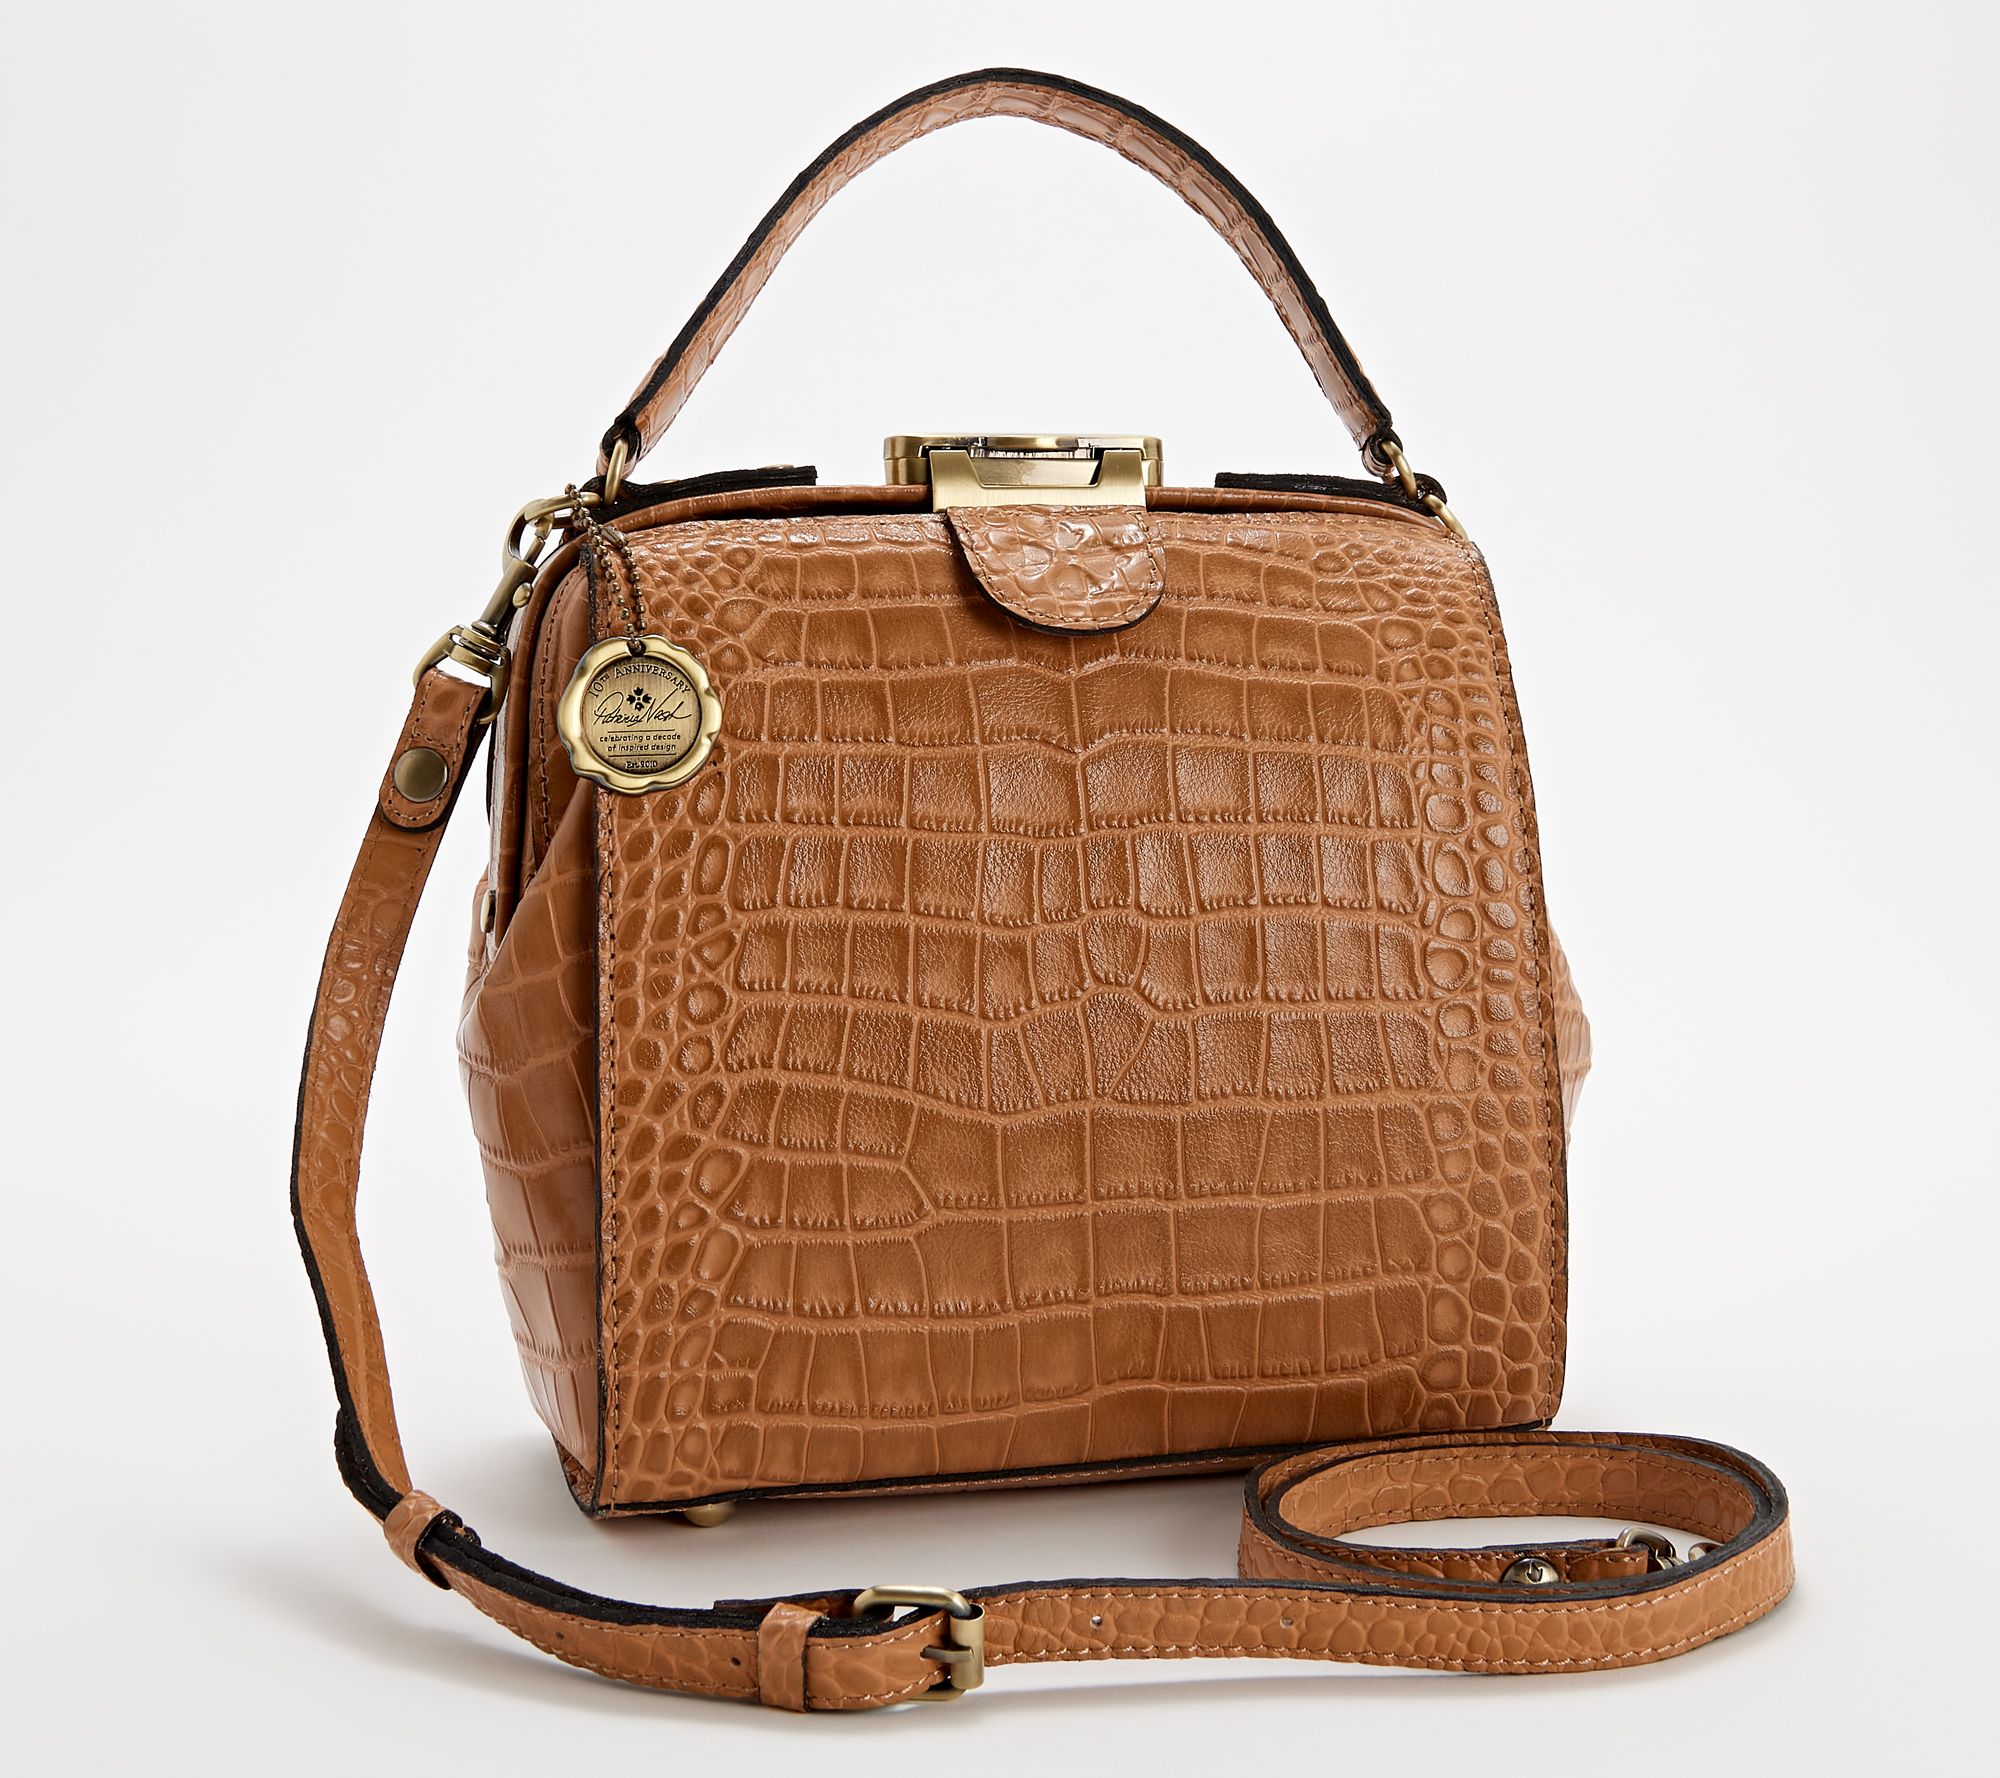 Qvc Shopping Online Patricia Nash Handbags | IQS Executive